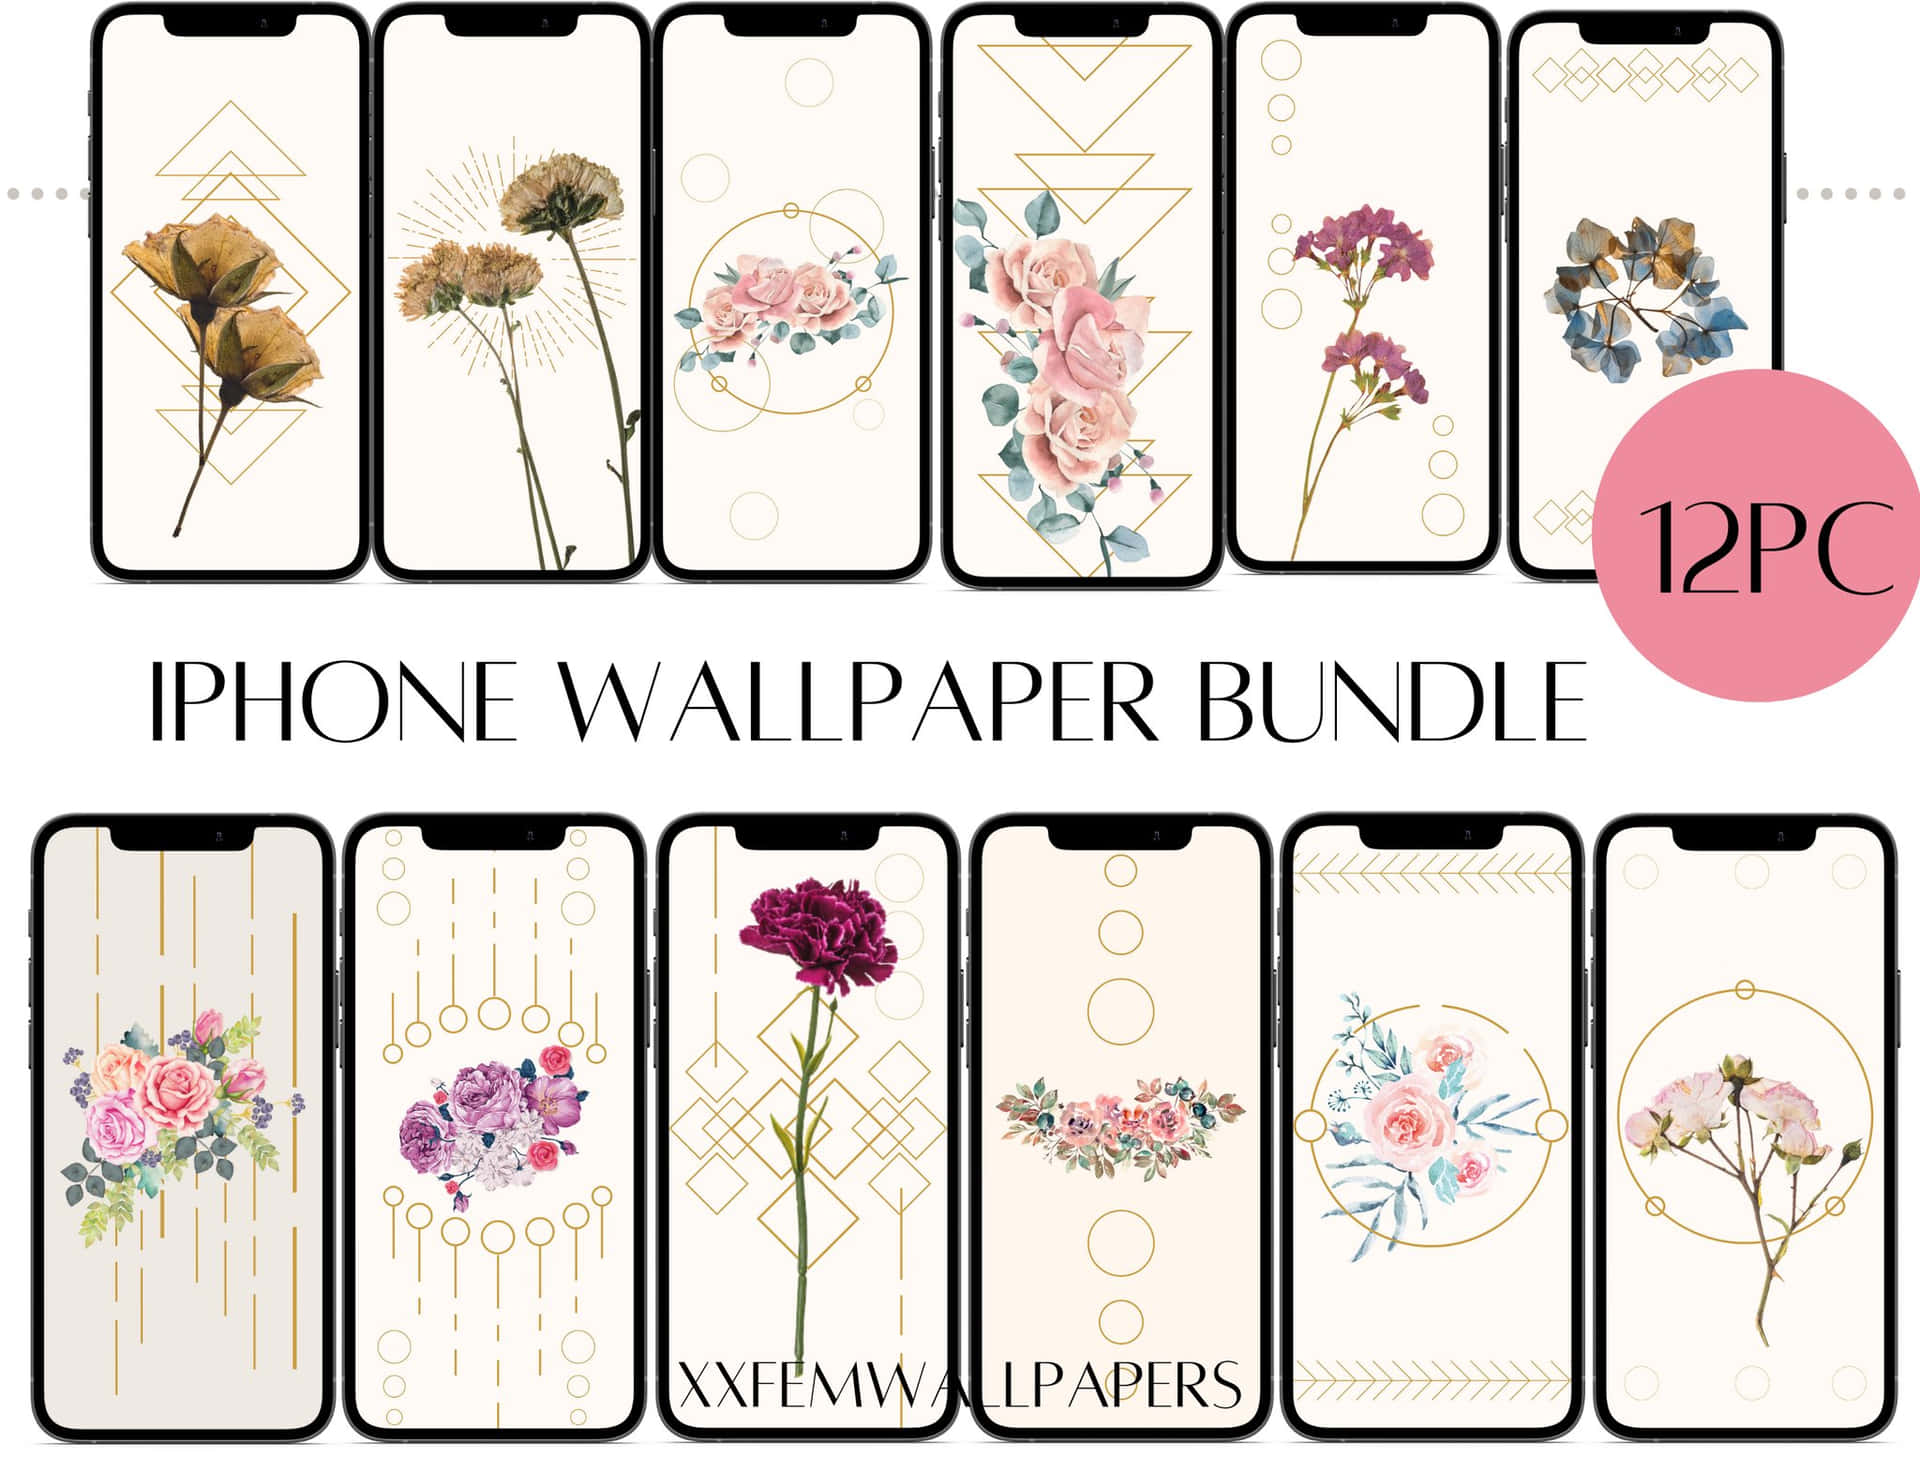 Iphonewallpaper-bundle Mit Verschiedenen Floralen Designs Wallpaper